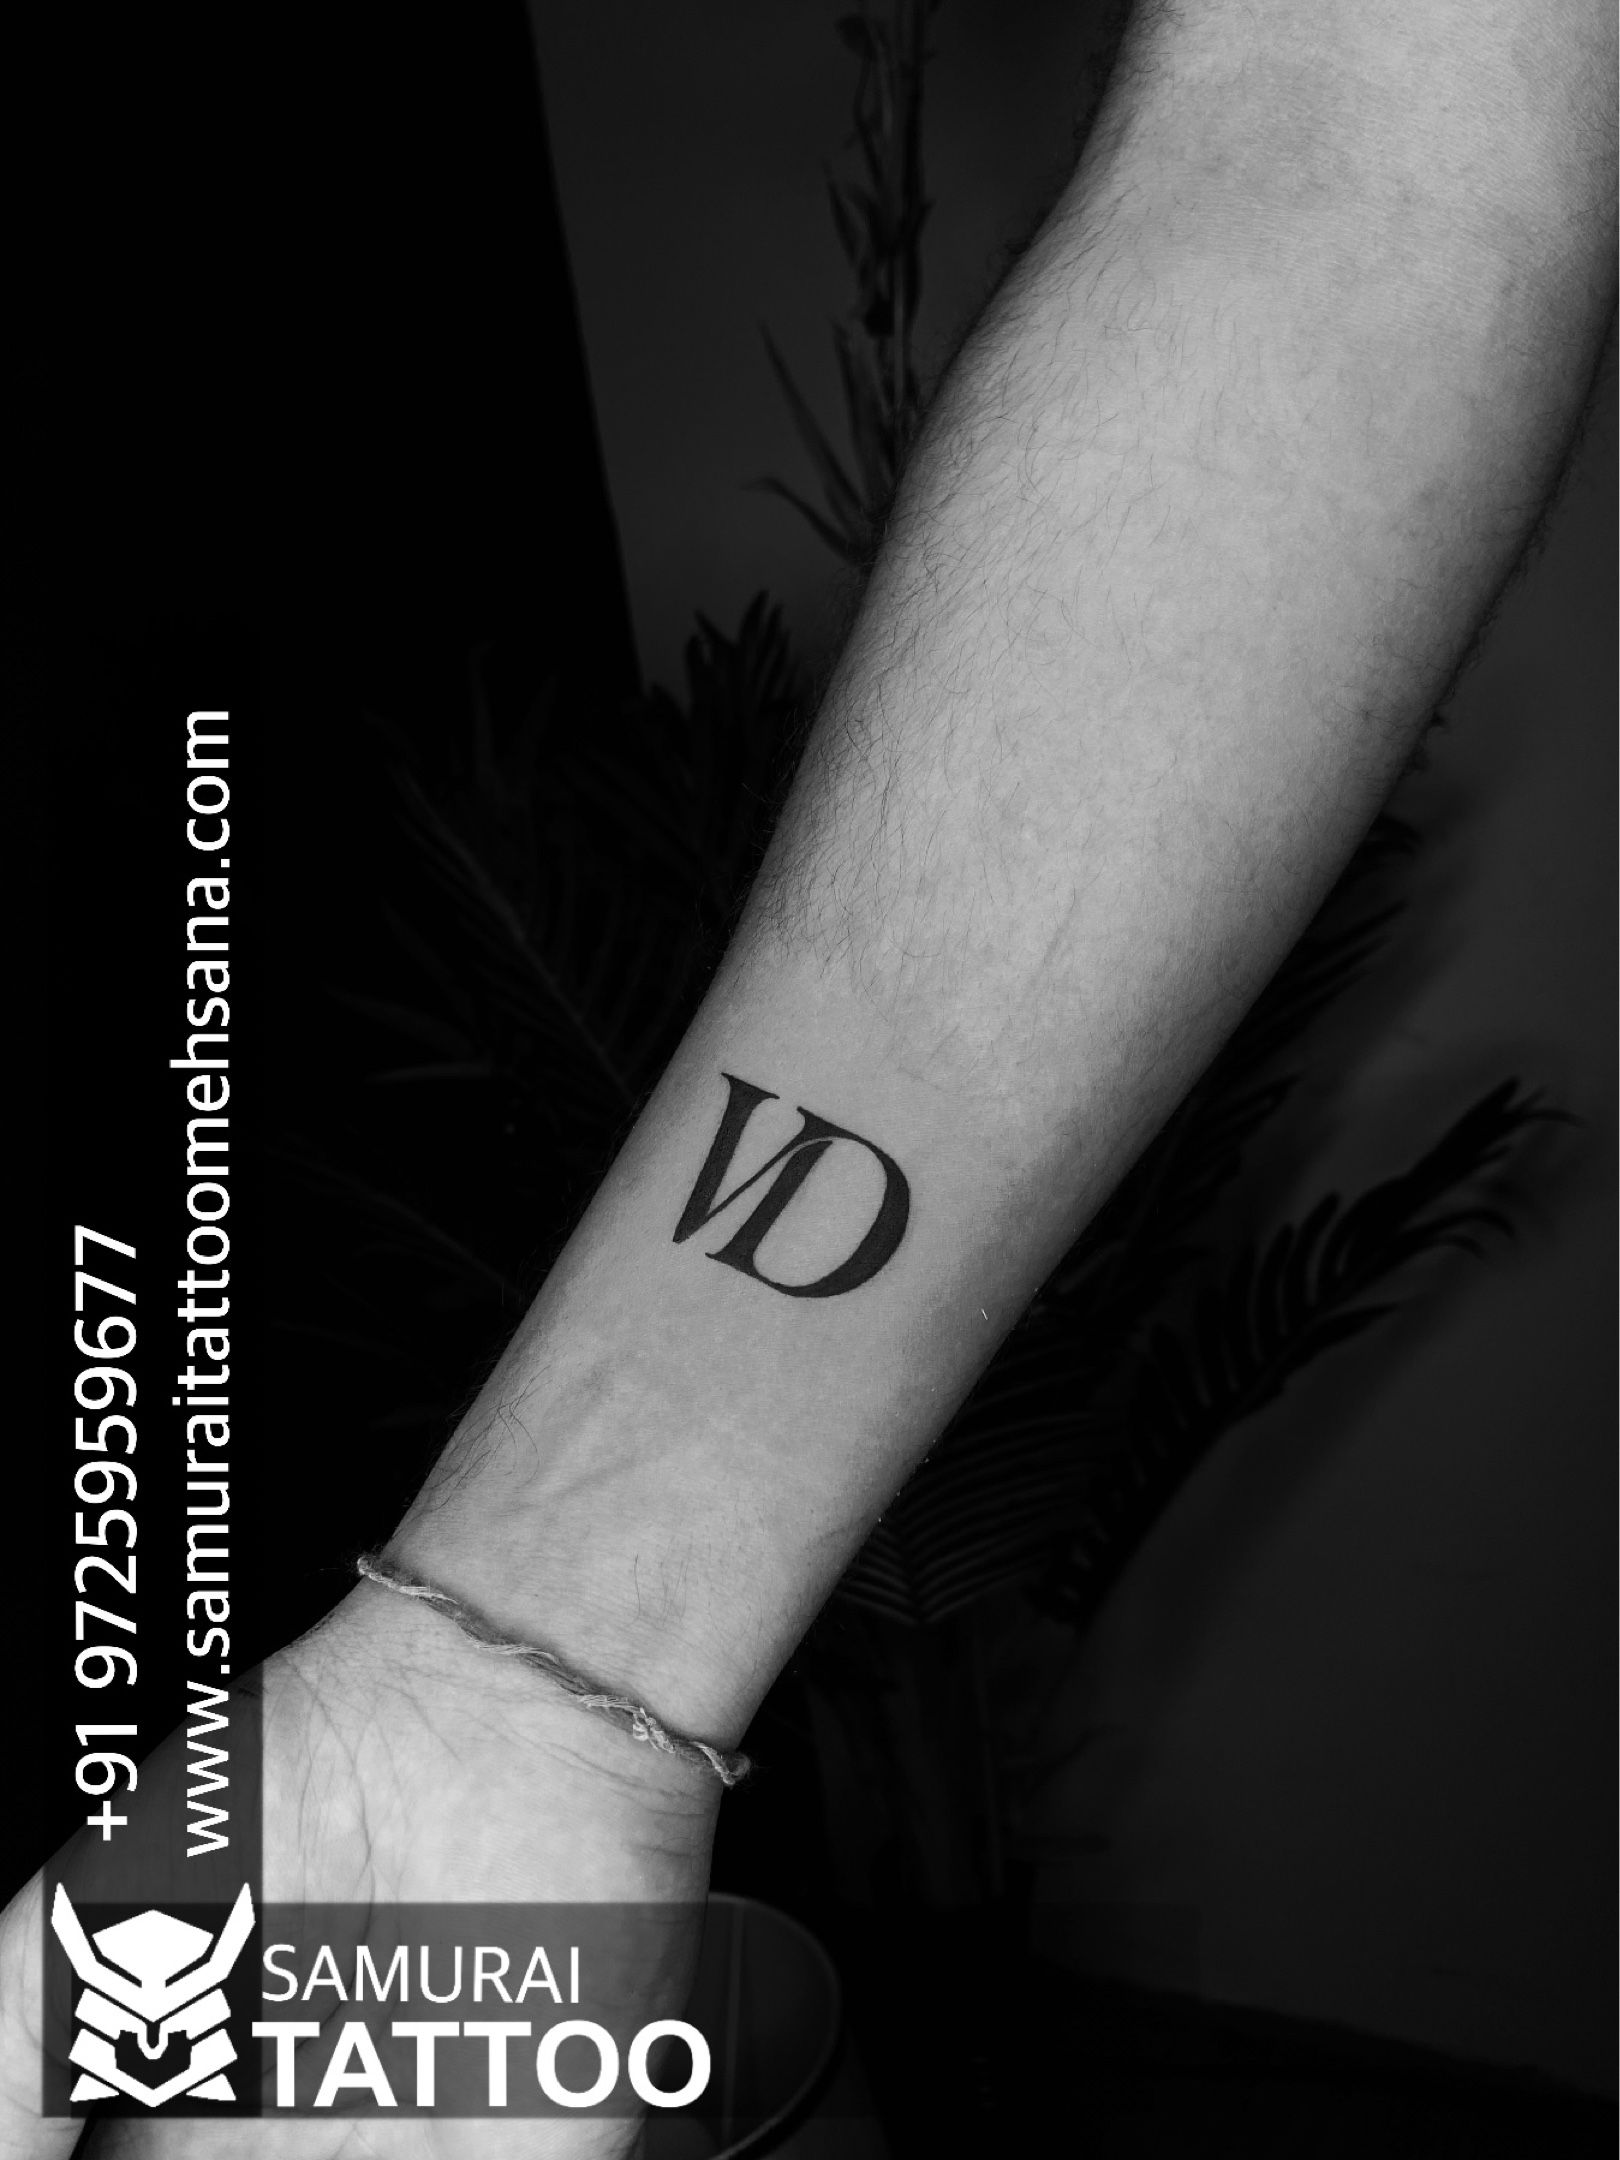 2171 Tattoo Designs D Images Stock Photos  Vectors  Shutterstock